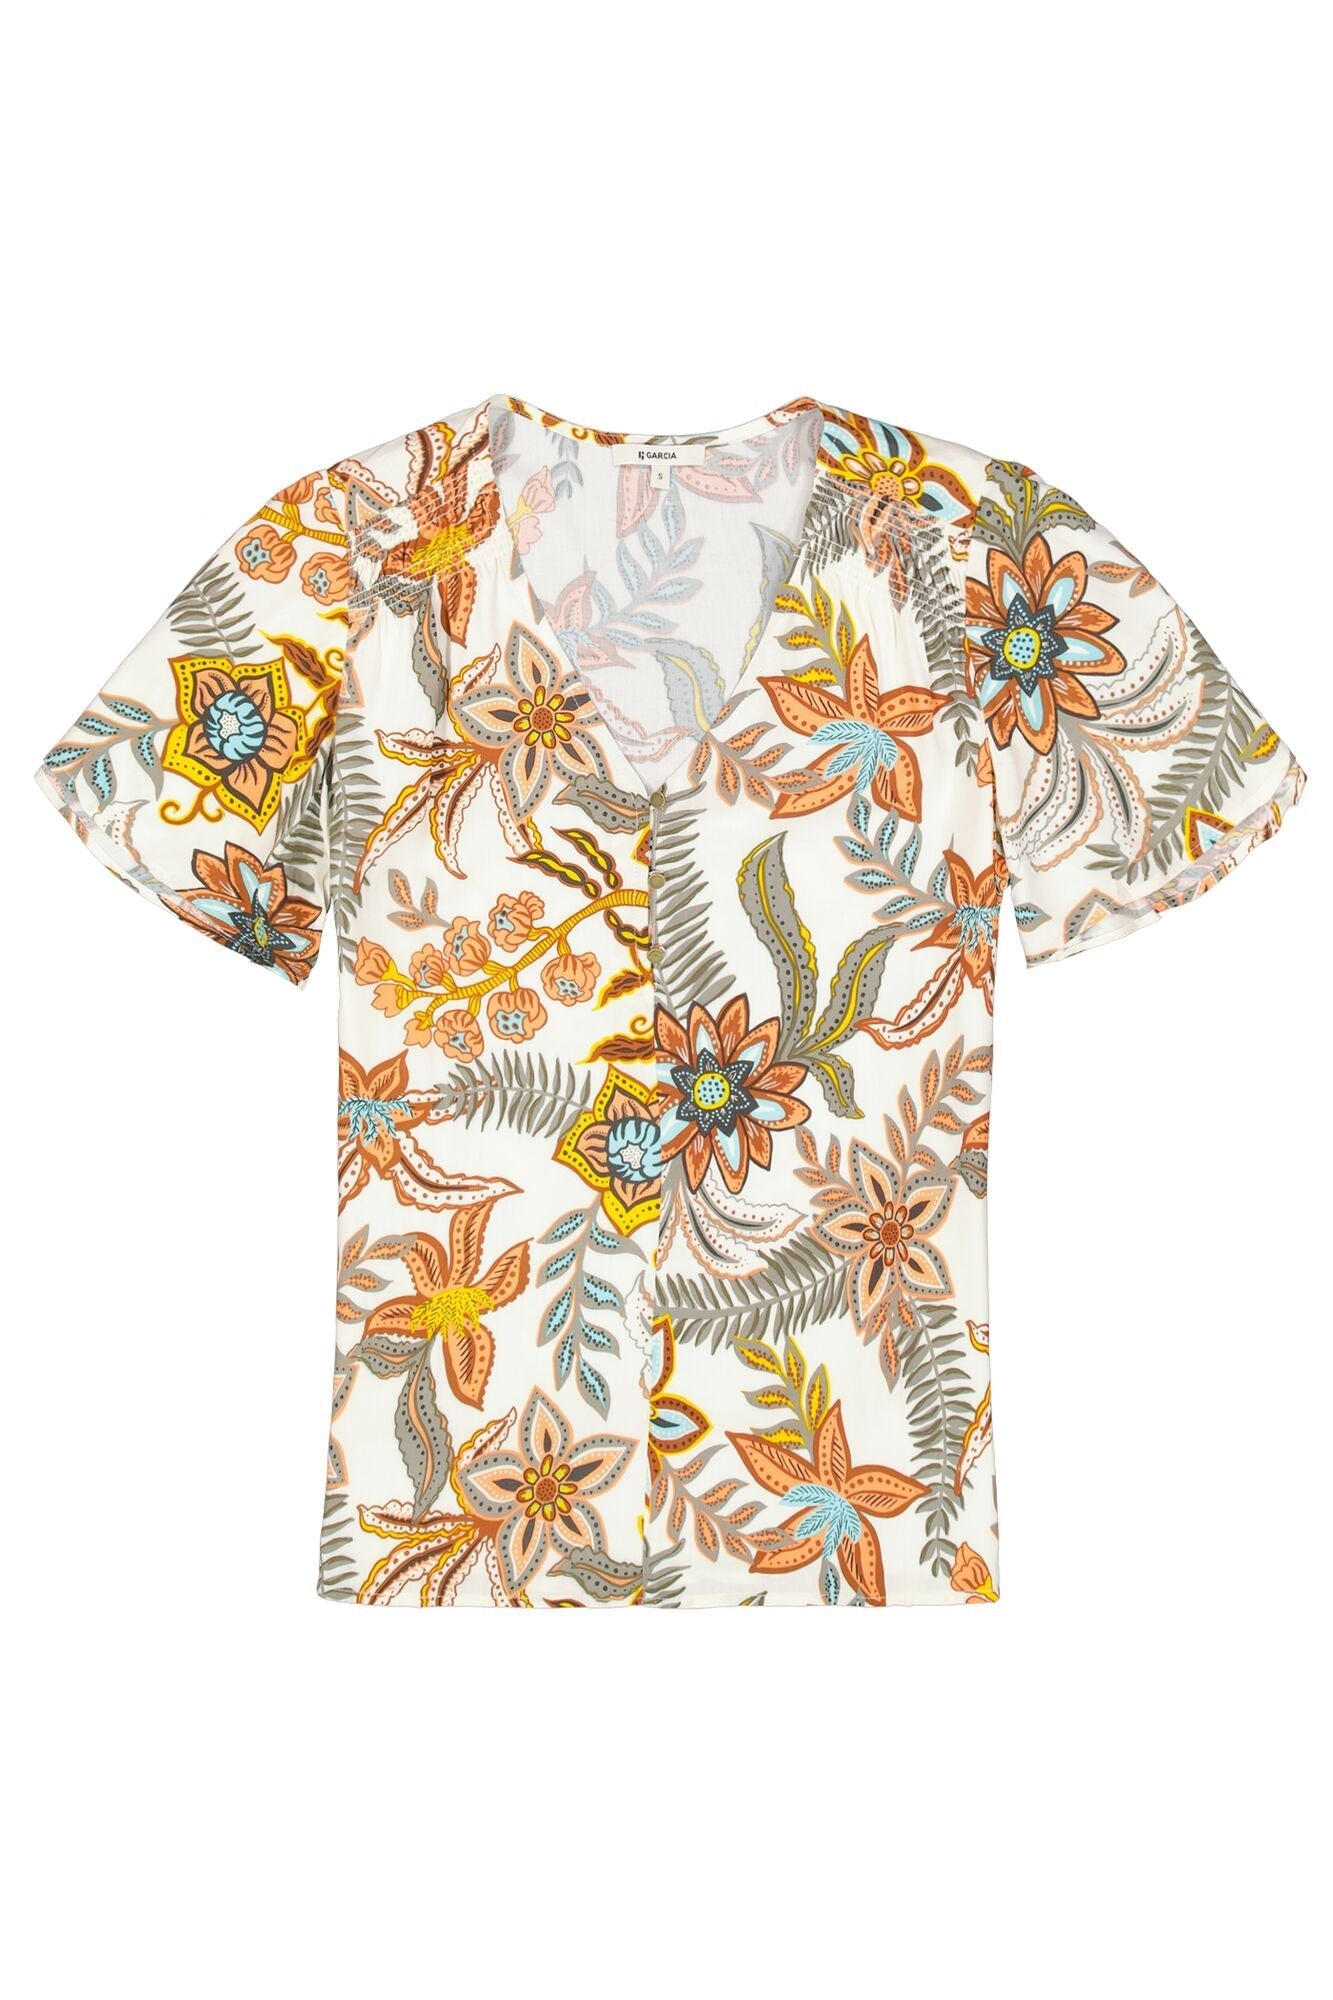 Garcia (Q40032) Women's Short Flounce Sleeve V-Neck Textured Top in Retro Orange Floral Print